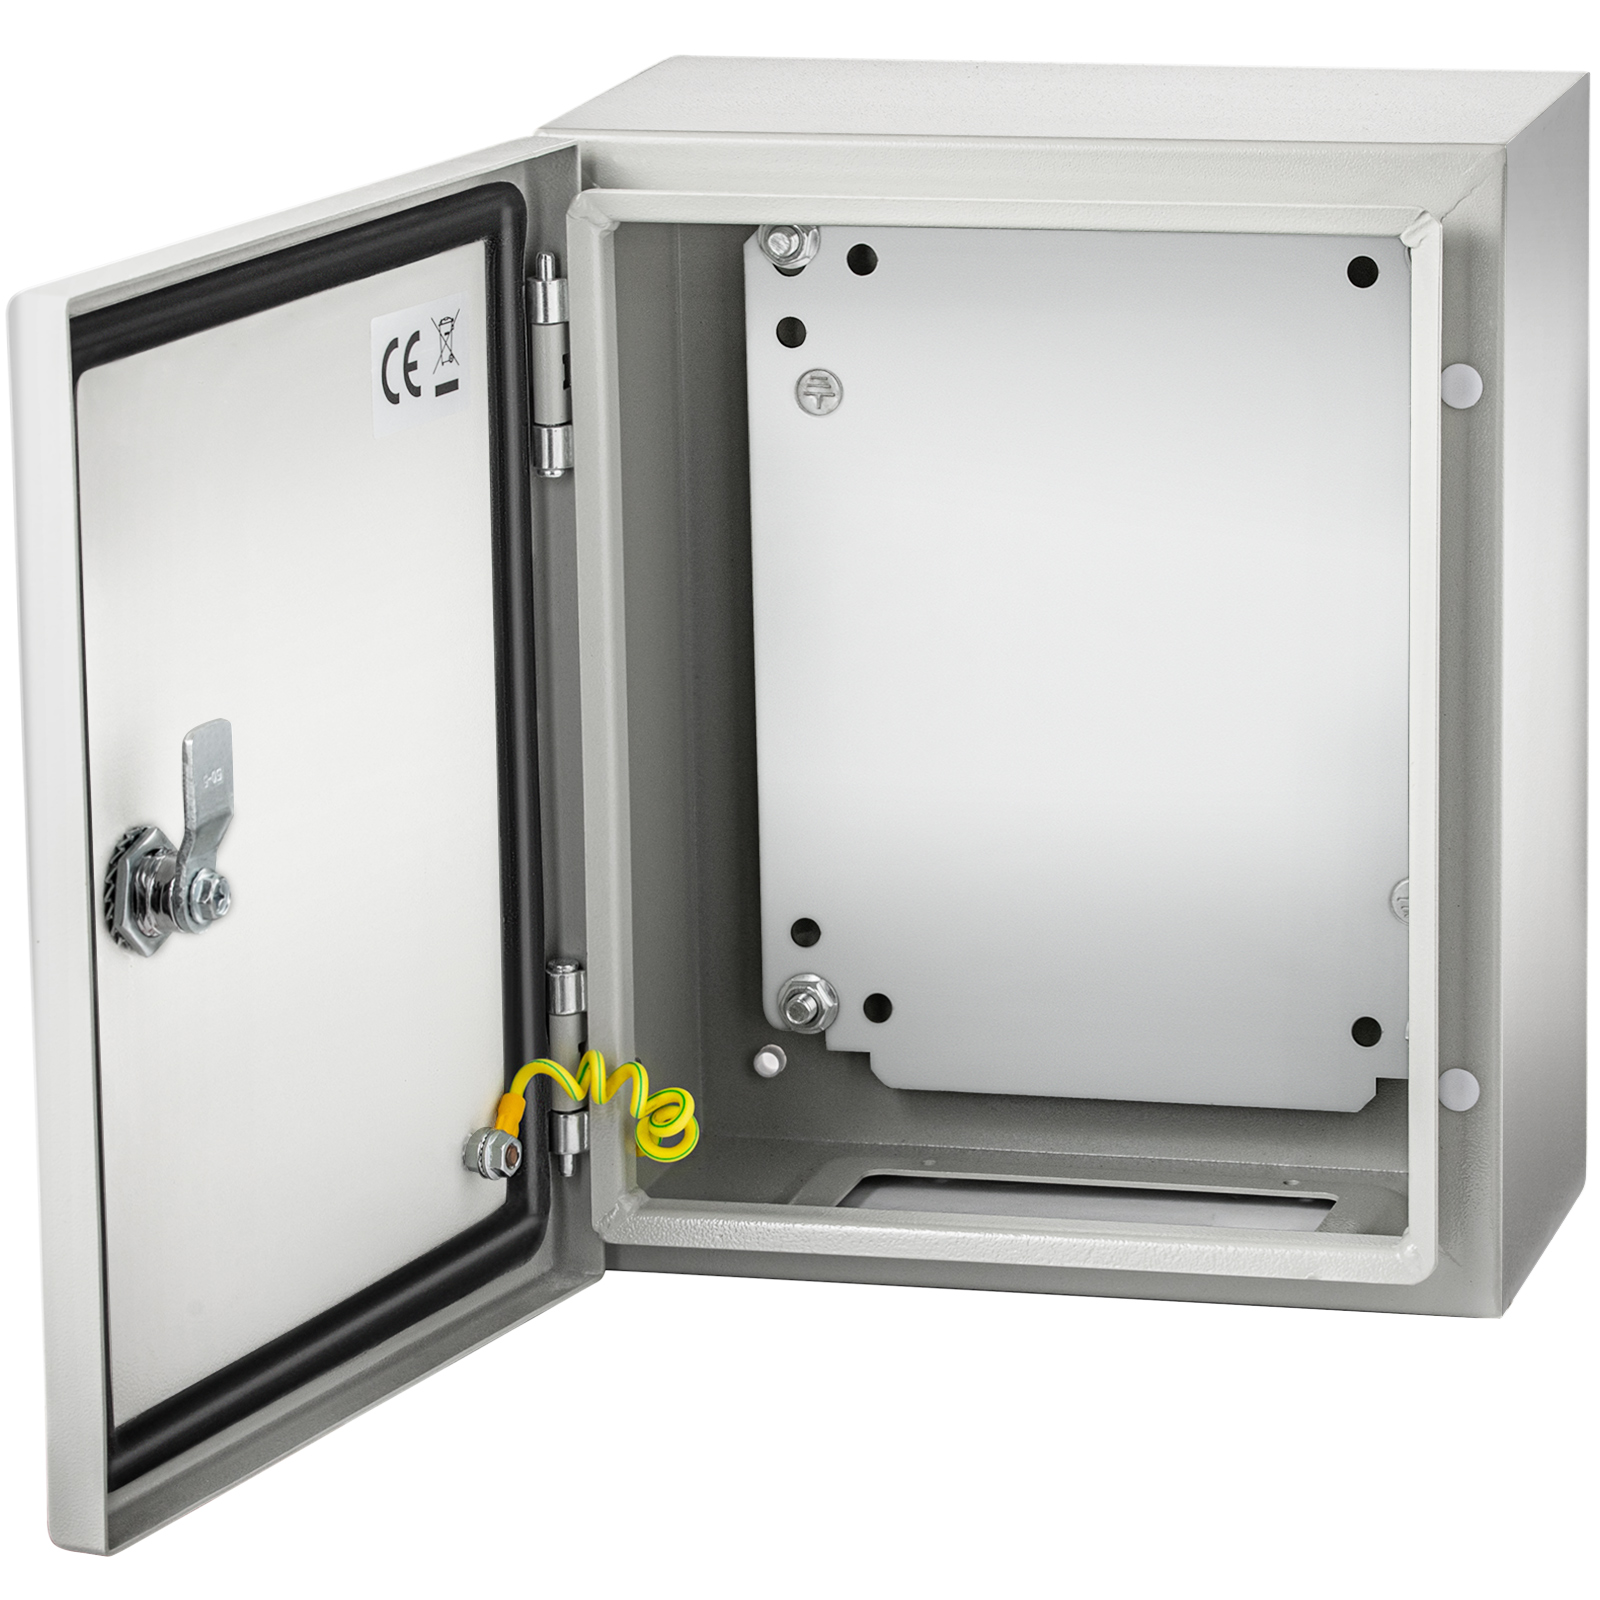 Steel Electrical Enclosure,8x8x6 inch,IP66 Weatherproof Box